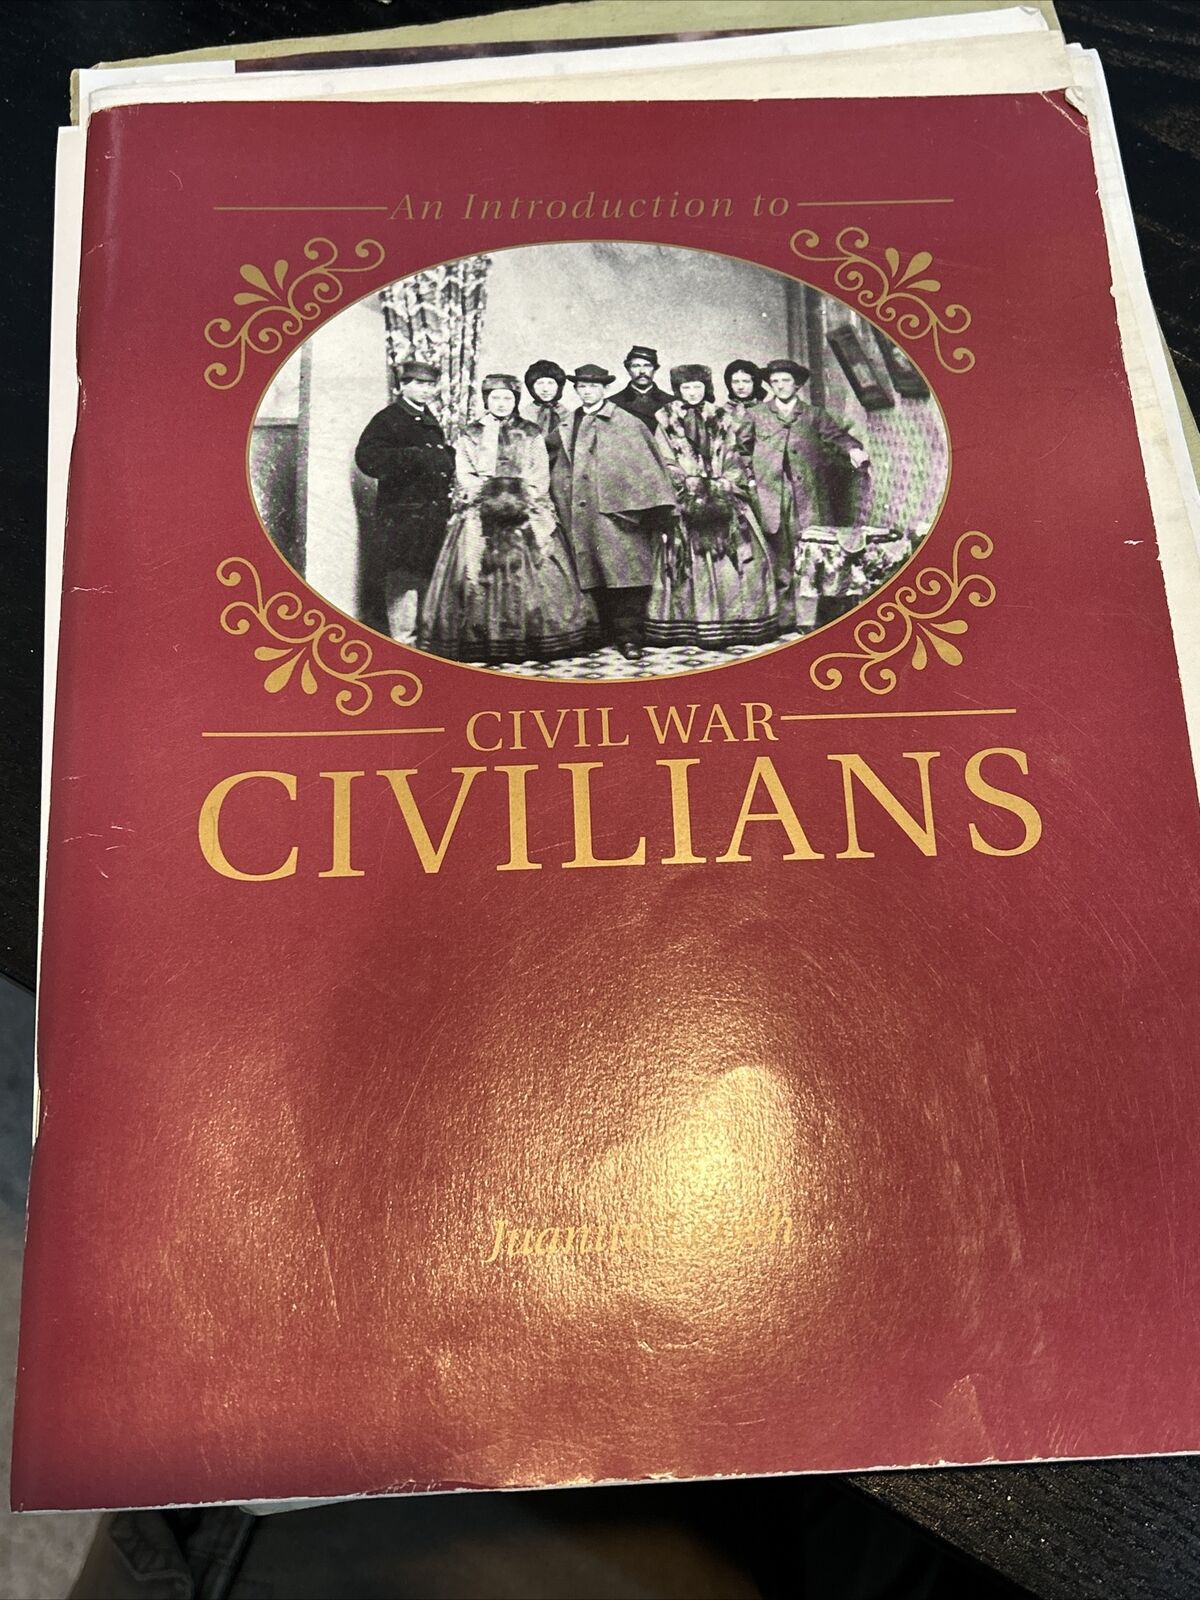 An Introduction to Civil War civilians by Juanita Leisch